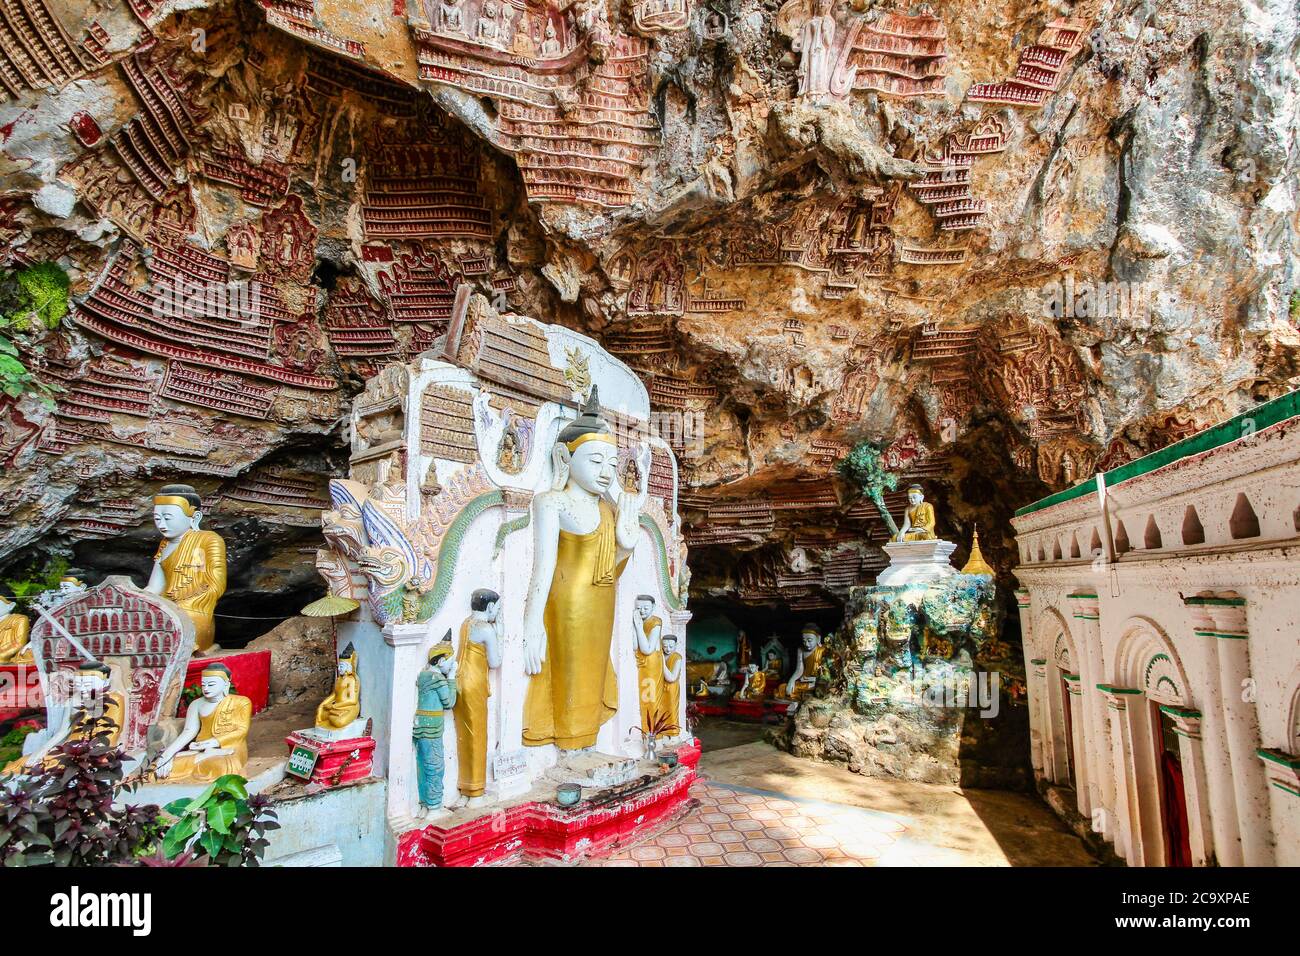 Buddha Statues in Yathaypyan Kawgungu Cave, Hpa An , Myanamar, former Burma Stock Photo